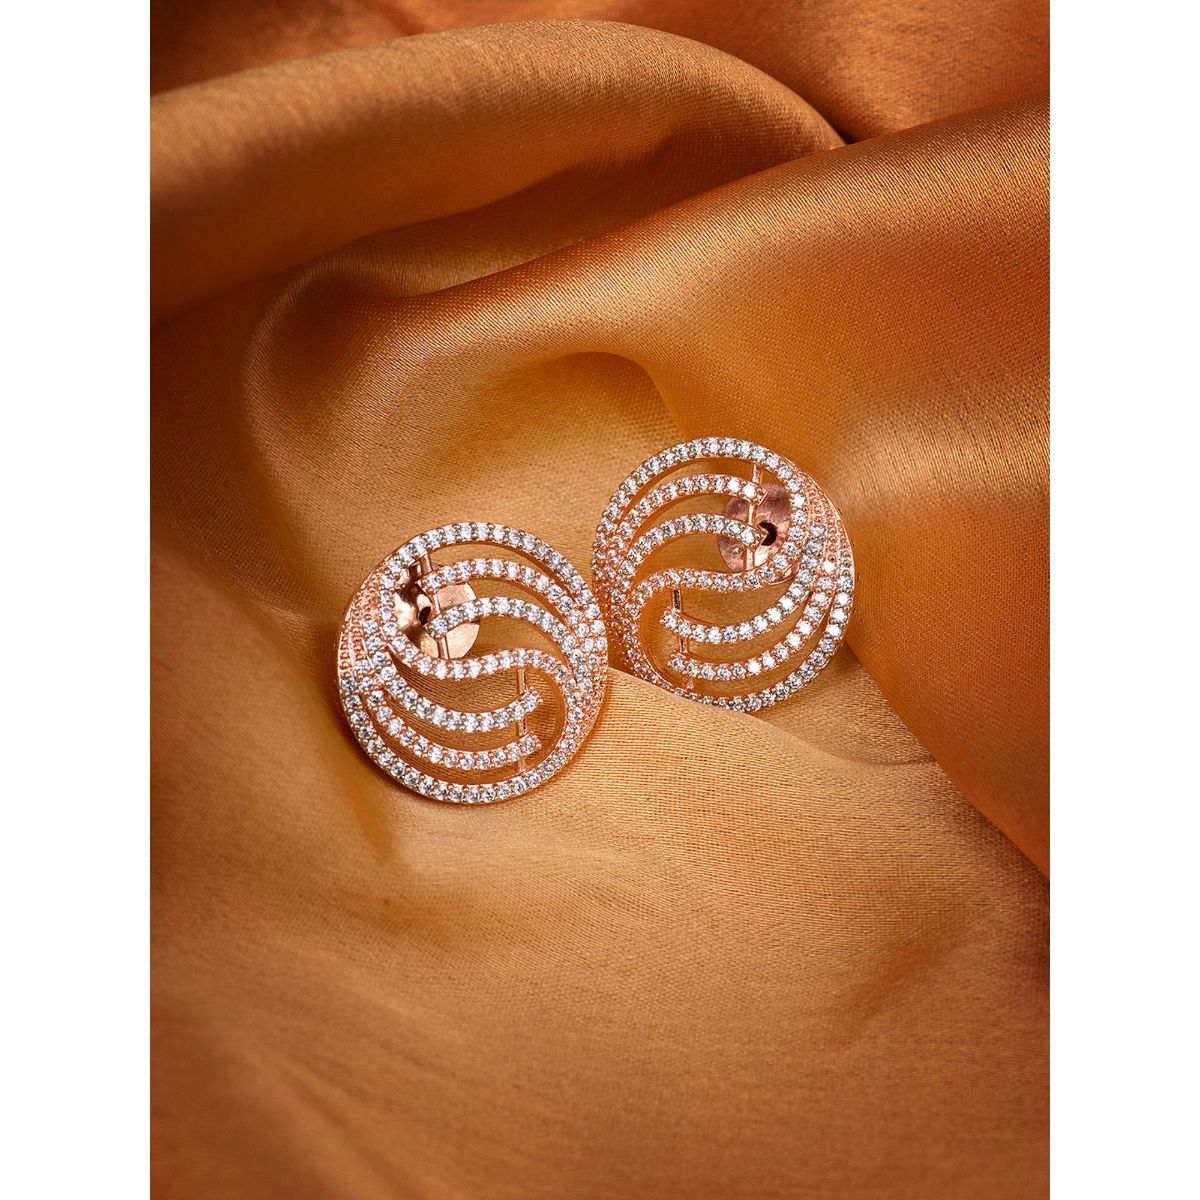 Buy Yellow Gold Earrings for Women by Pc Jeweller Online | Ajio.com